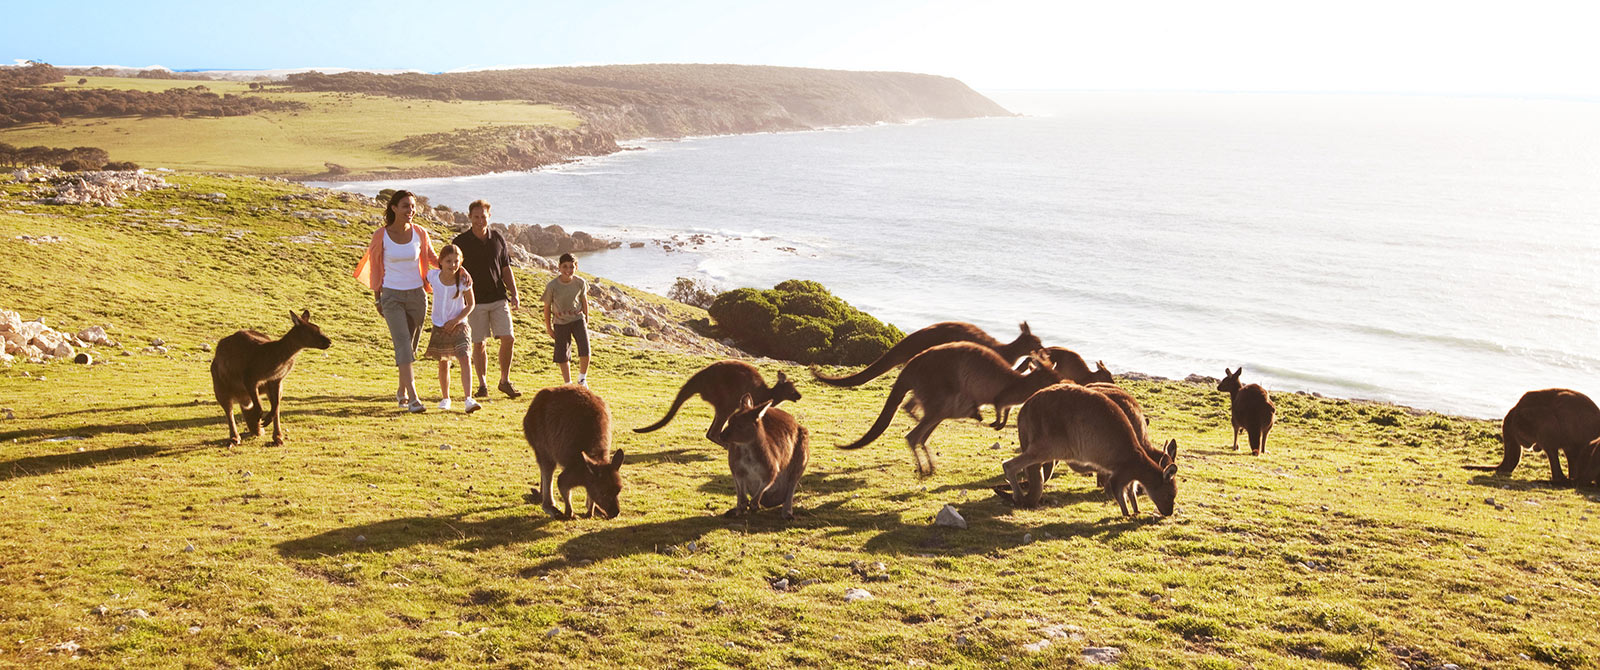 Family on Kangaroo Island Australia - Best Multigenerational Family Vacations